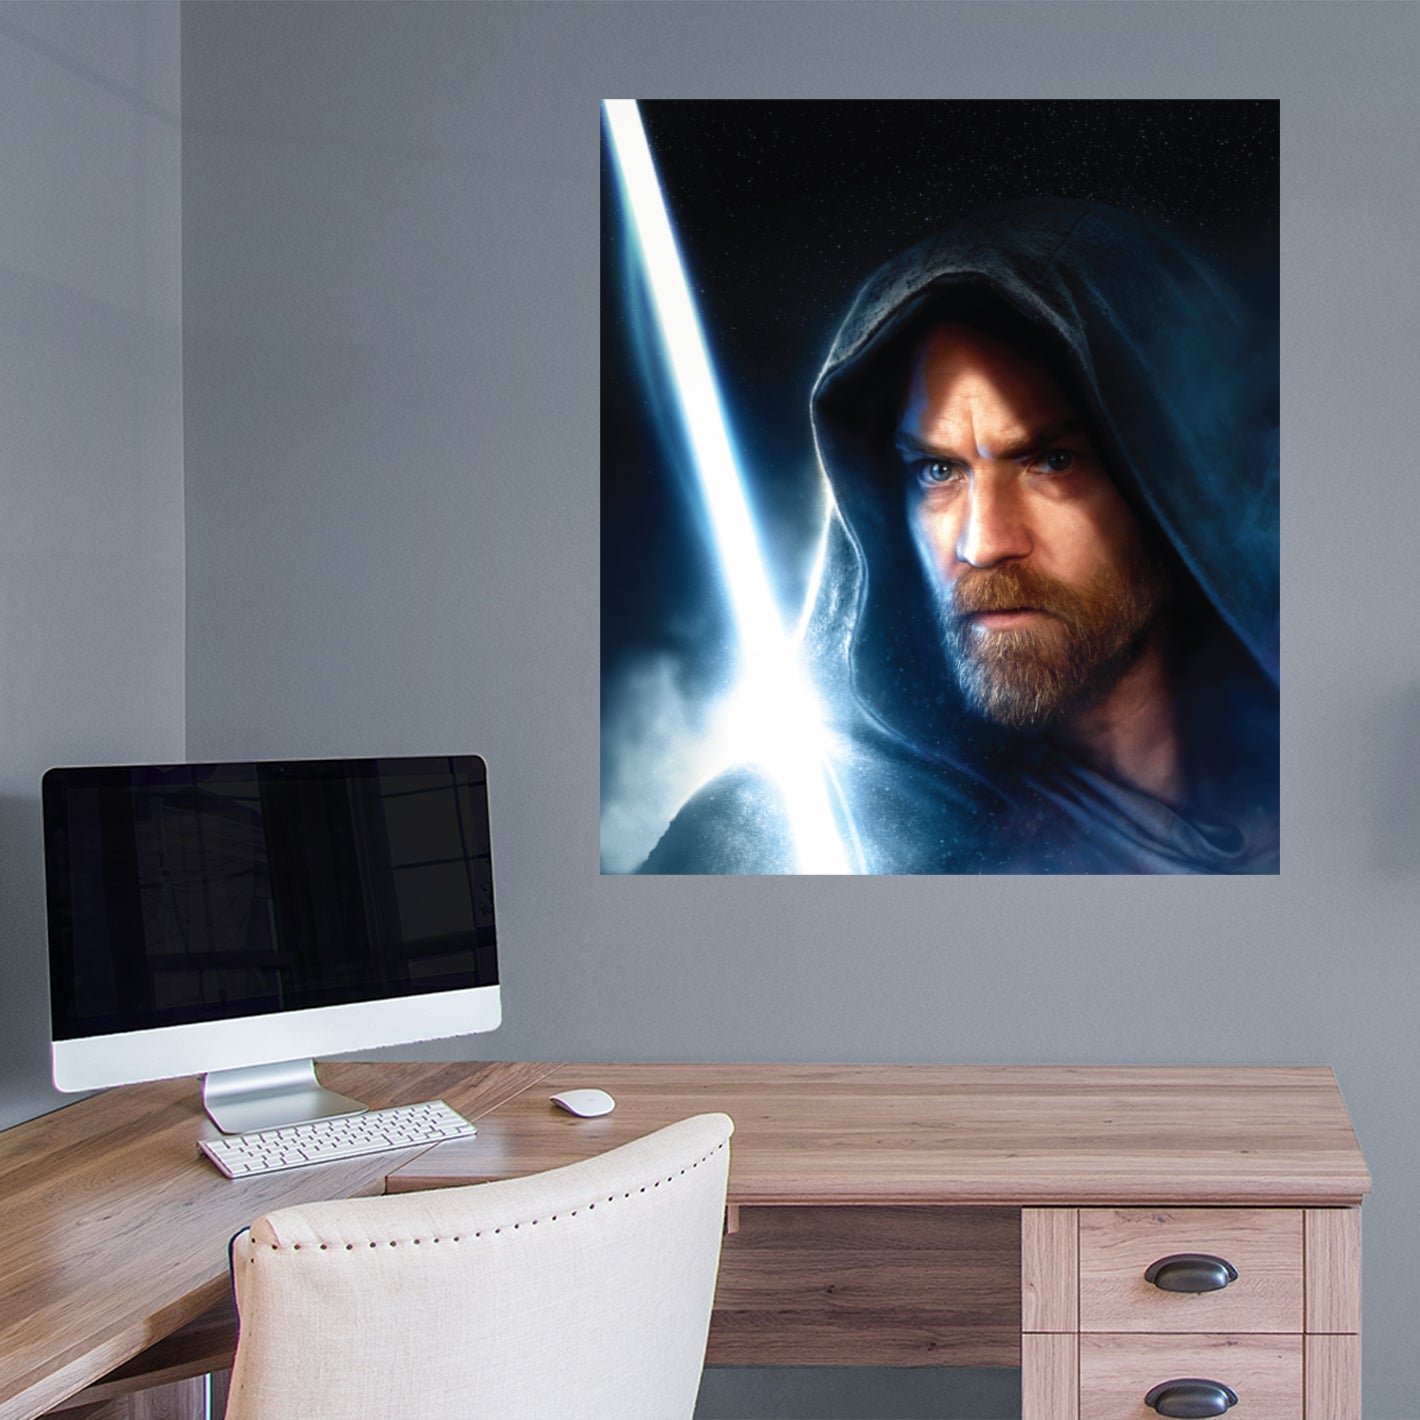 Obi-Wan Kenobi: Obi-Wan Hood Lightsaber Poster - Officially Licensed Star Wars Removable Adhesive Decal